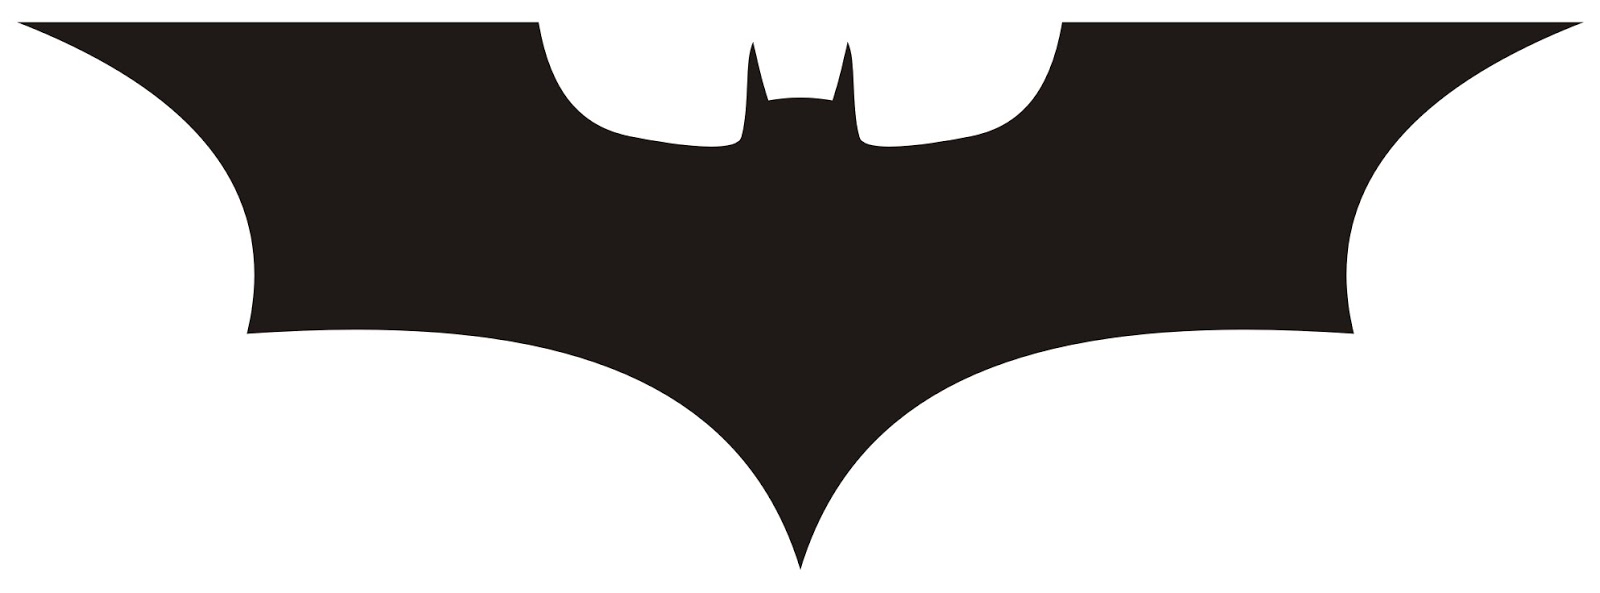 Picture Of Batman Logo | Free Download Clip Art | Free Clip Art ...